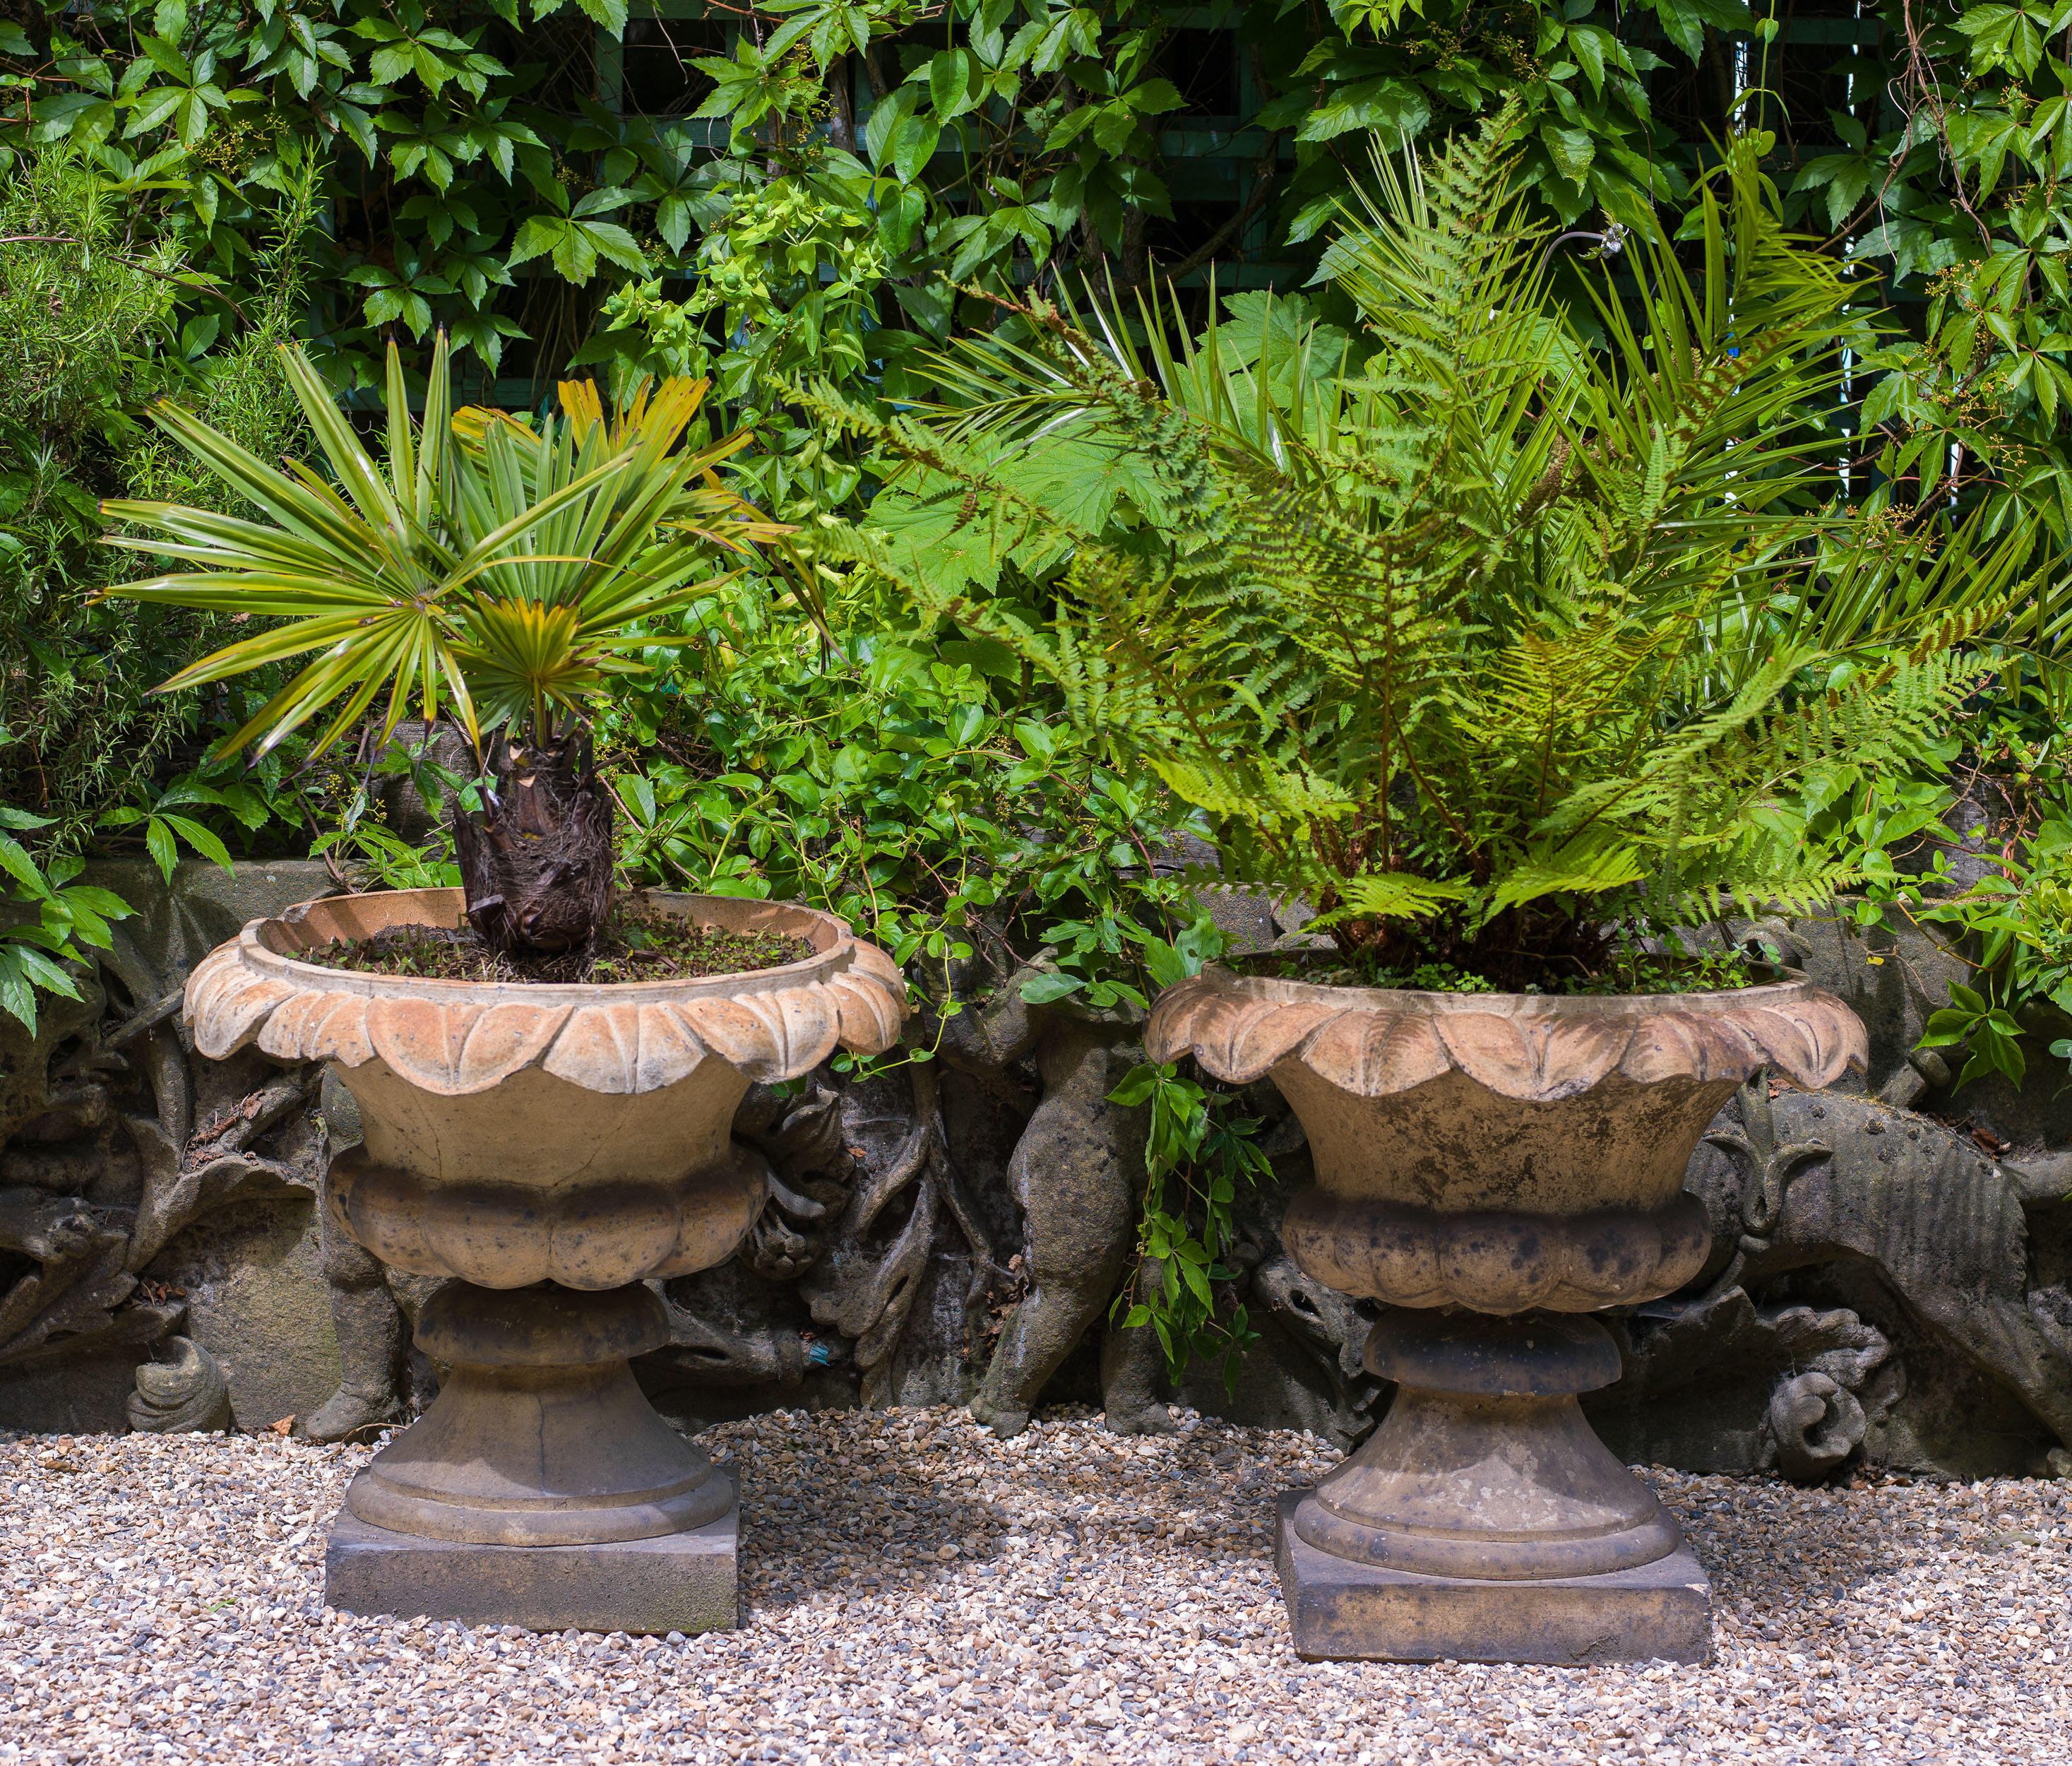 Victorian pair of terracotta garden urns in the Regency style.    